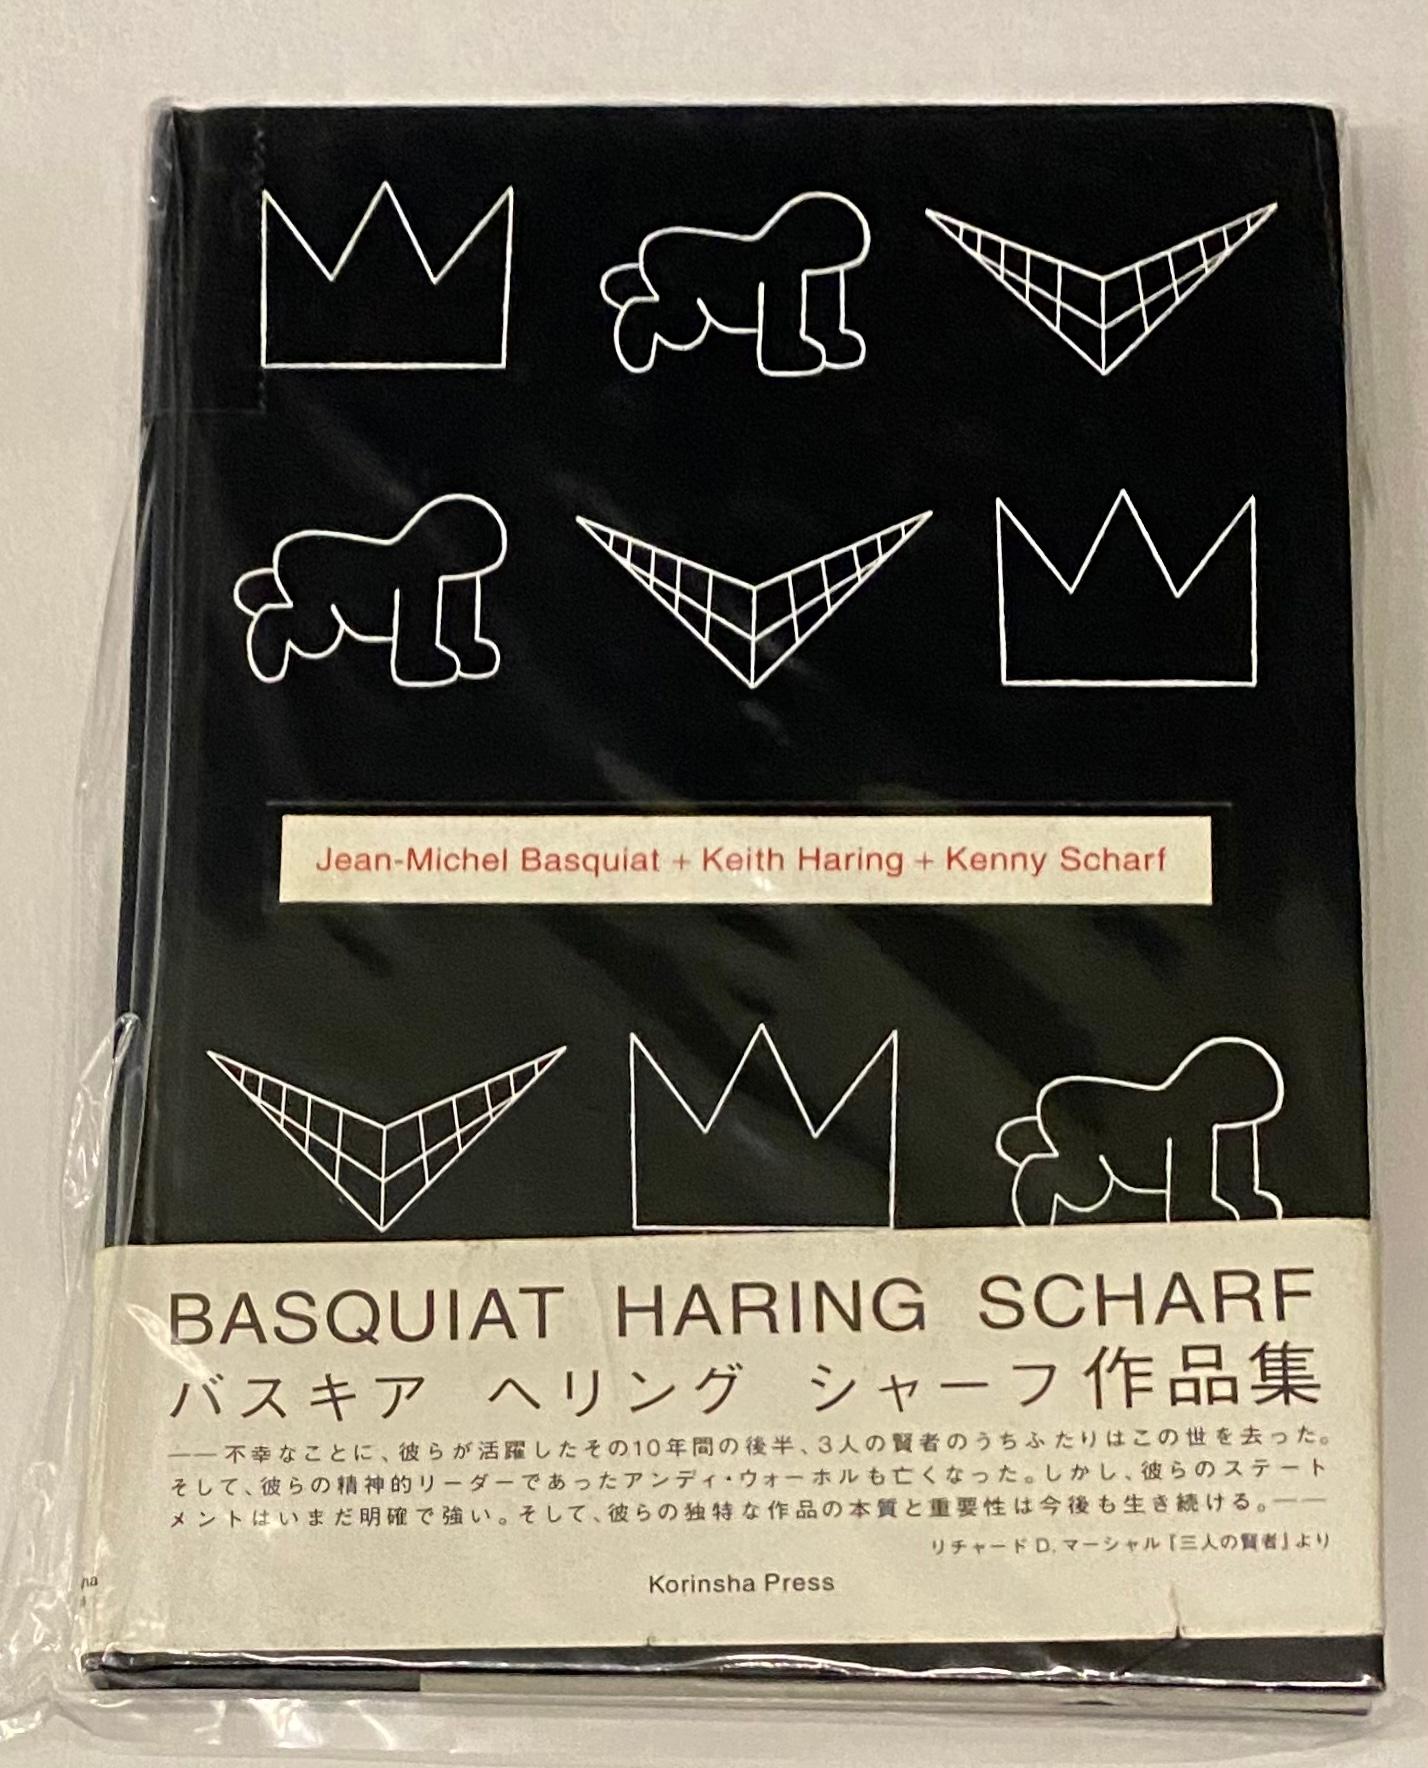 Basquiat Keith Haring Kenny Scharf Catalogue, 1998 3